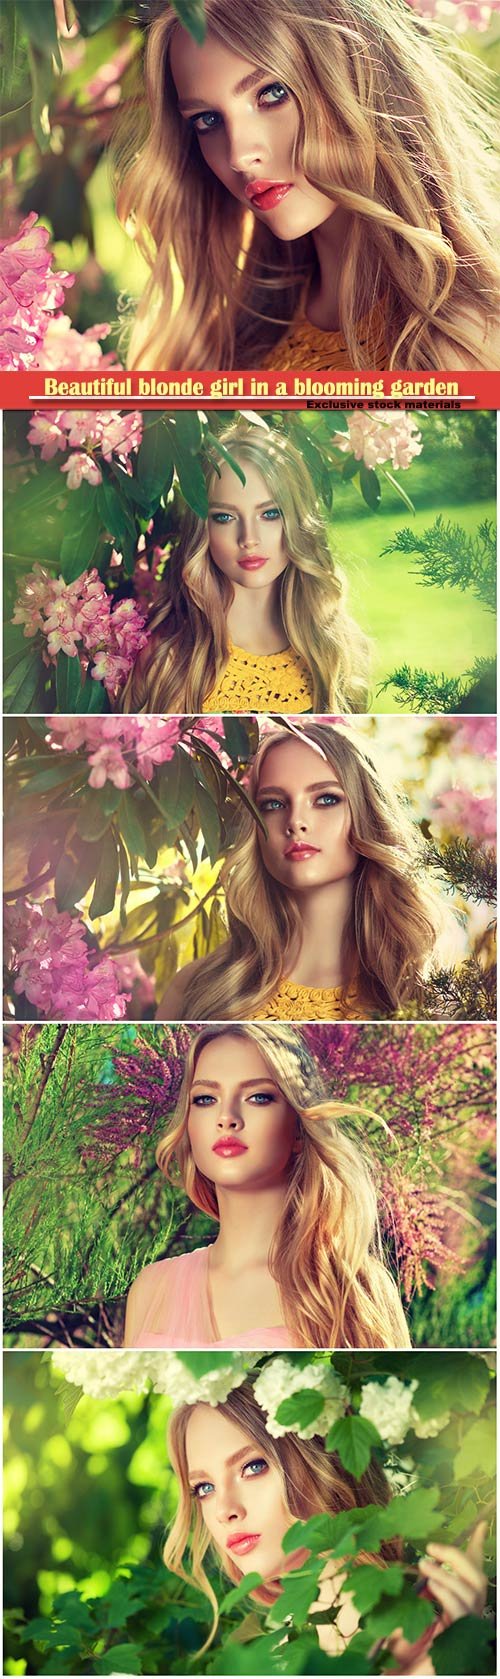 Beautiful blonde girl in a blooming garden